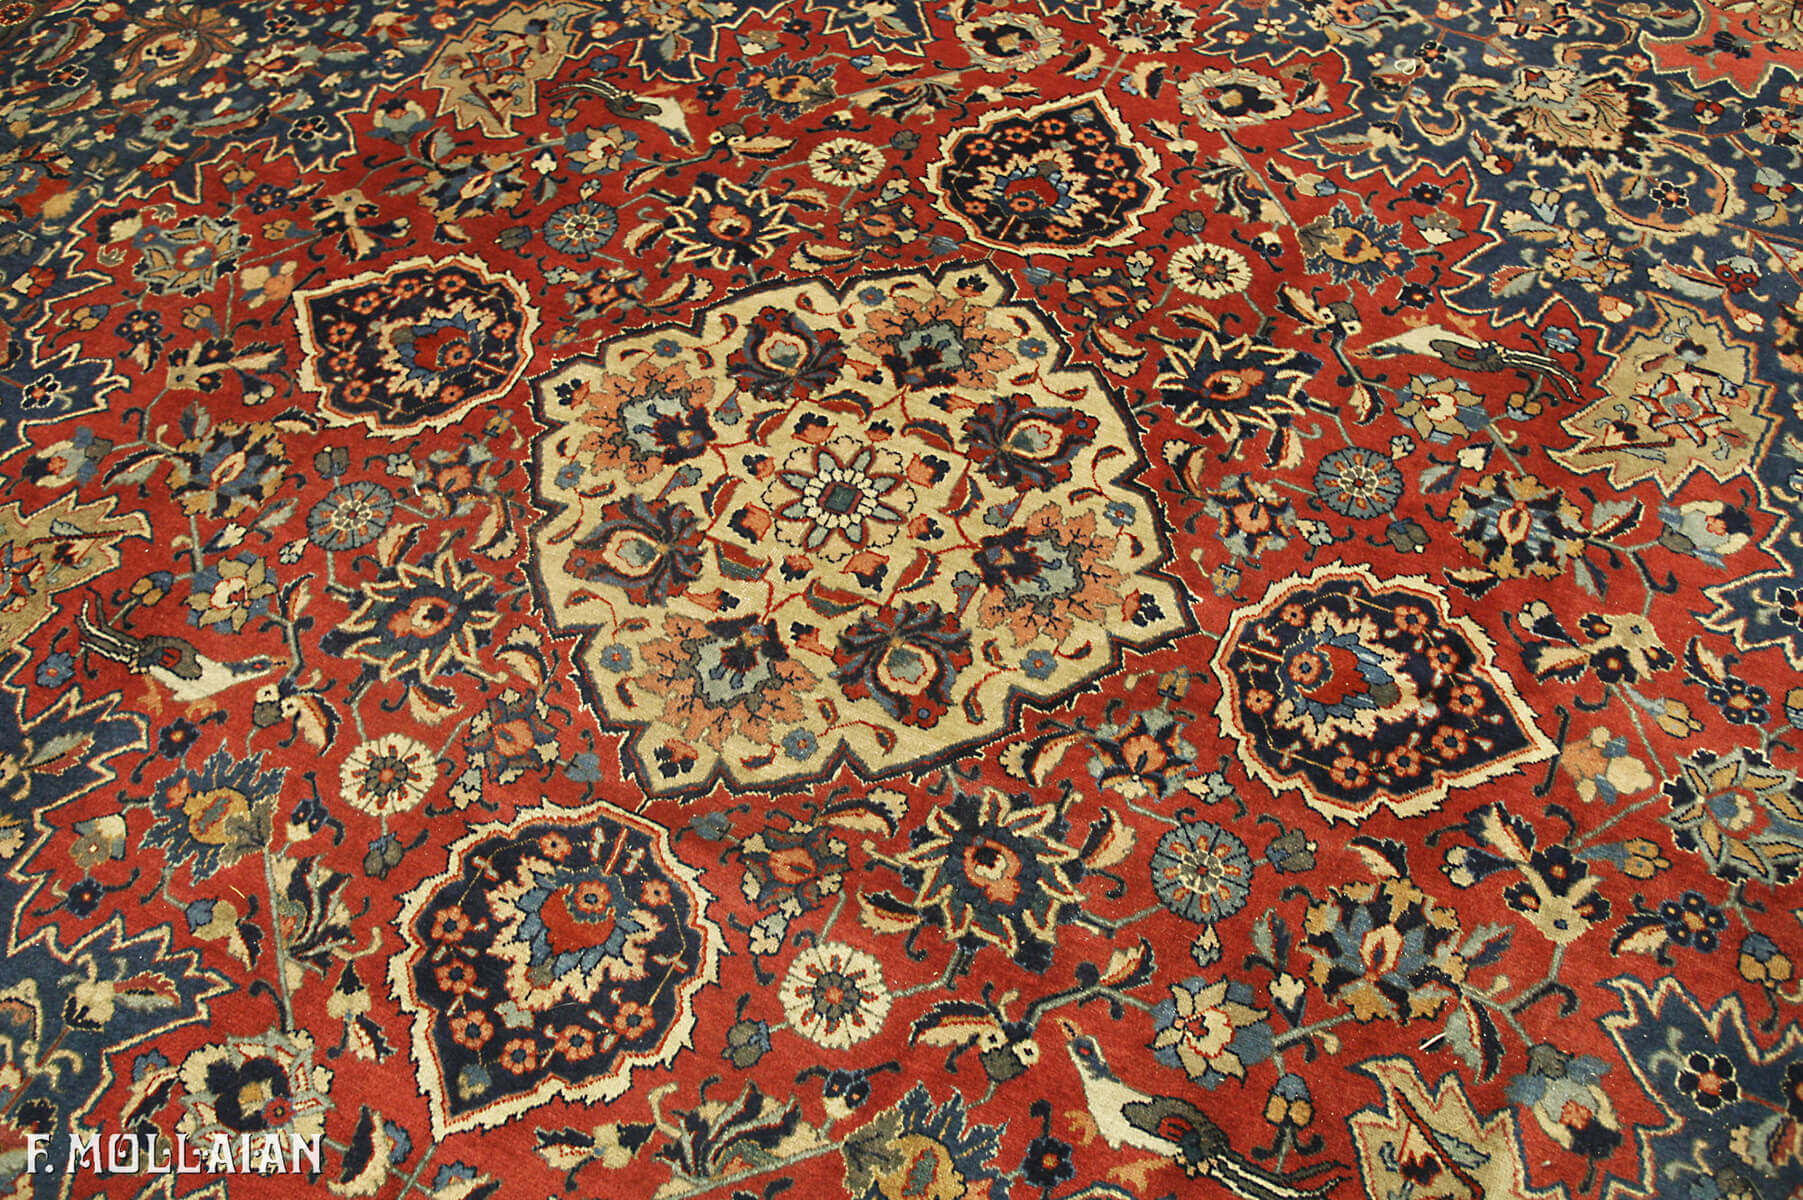 Antique Persian Tabriz Carpet n°:42149596